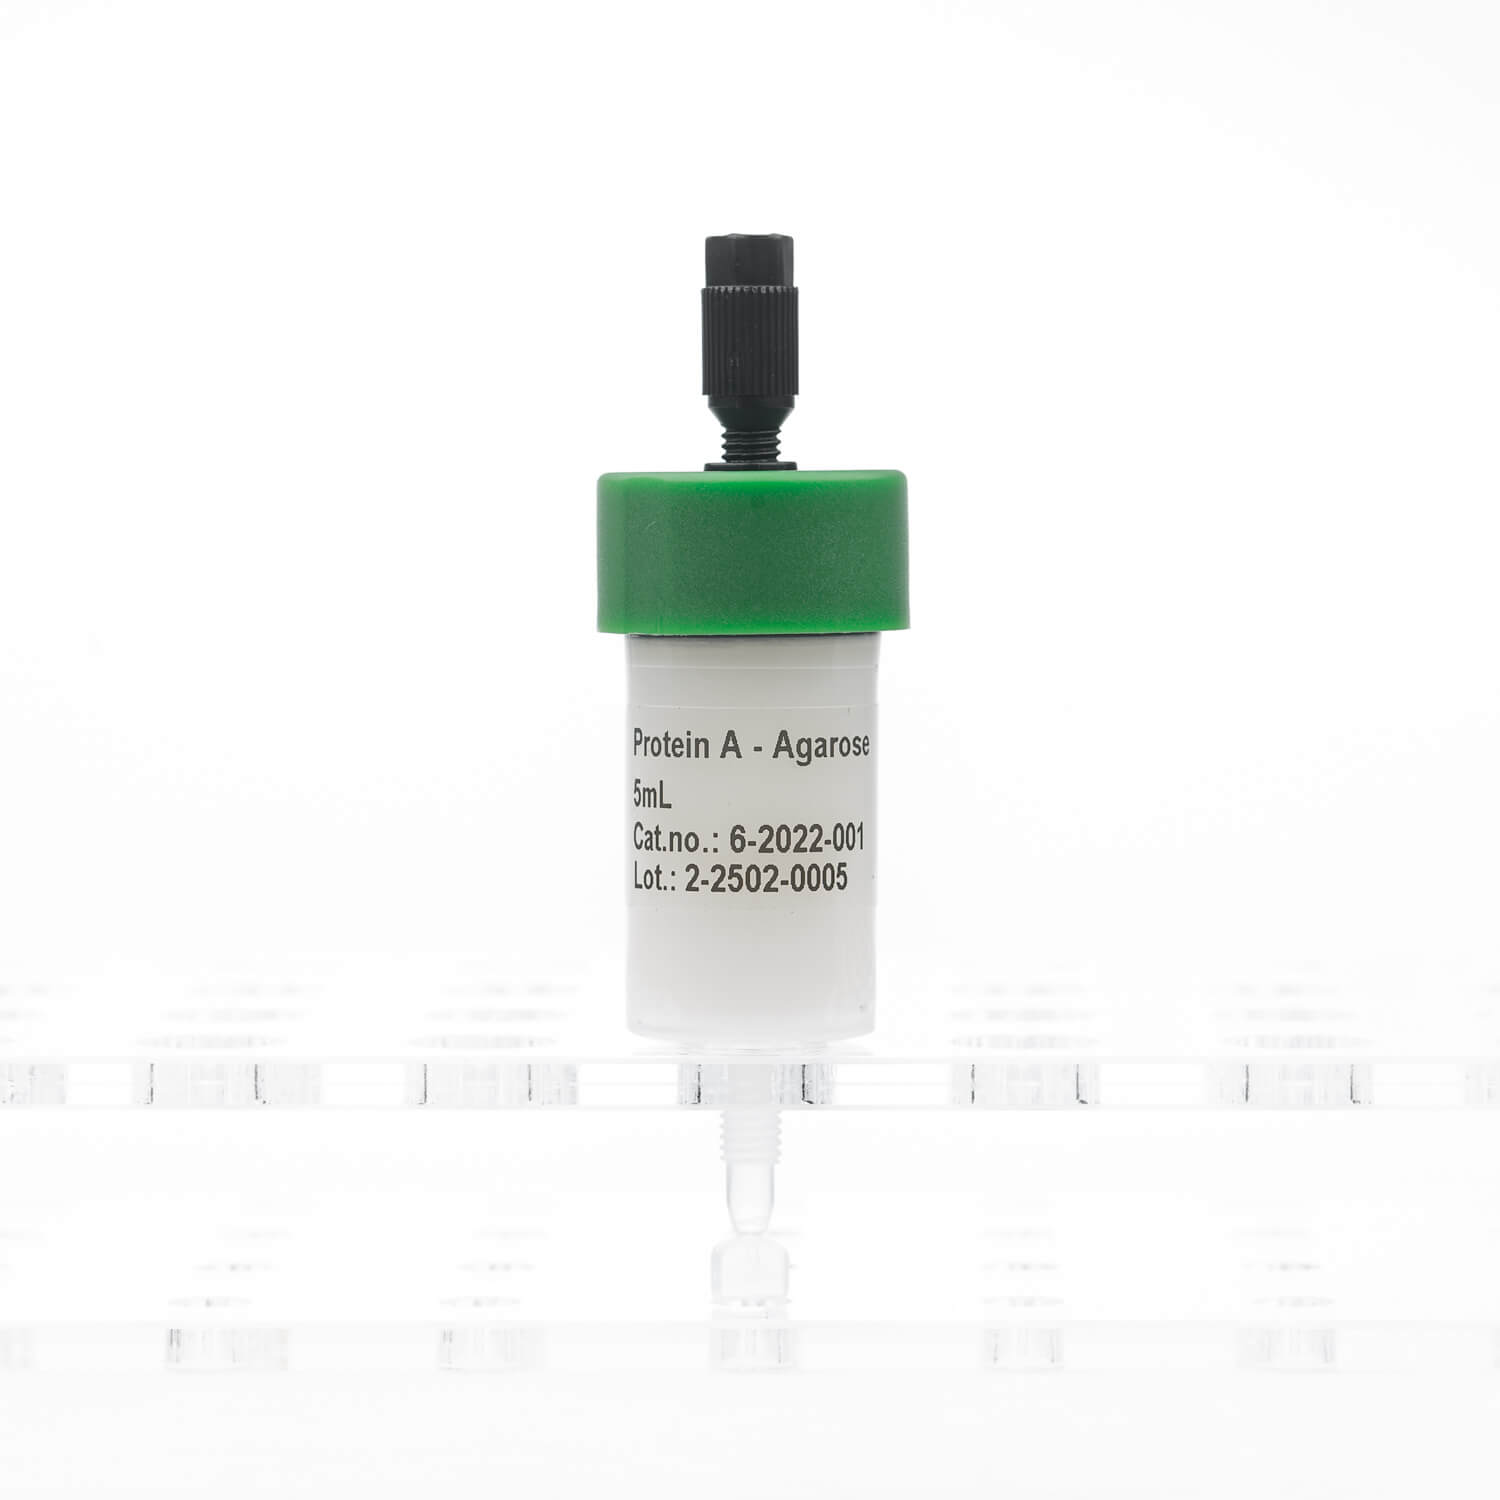 Protein A Agarose cartridge